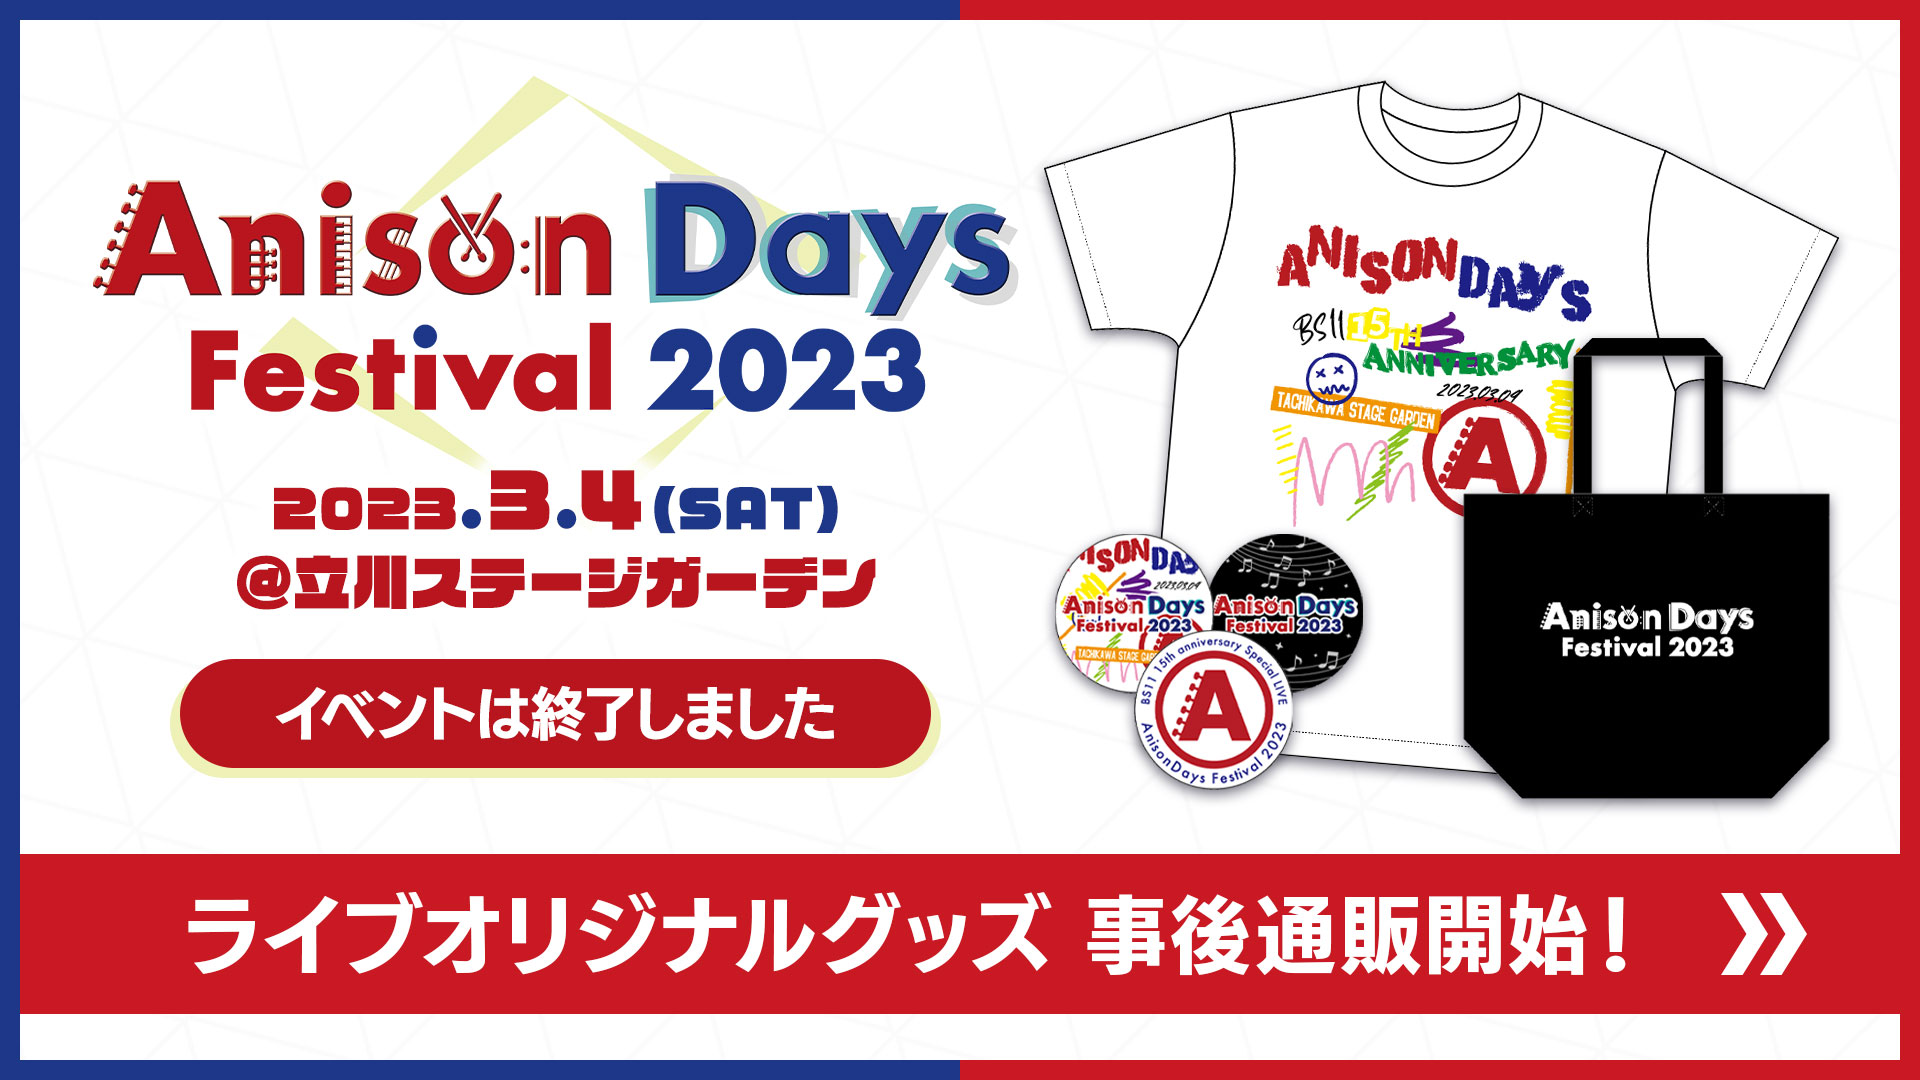 Anison Days Festival 2023